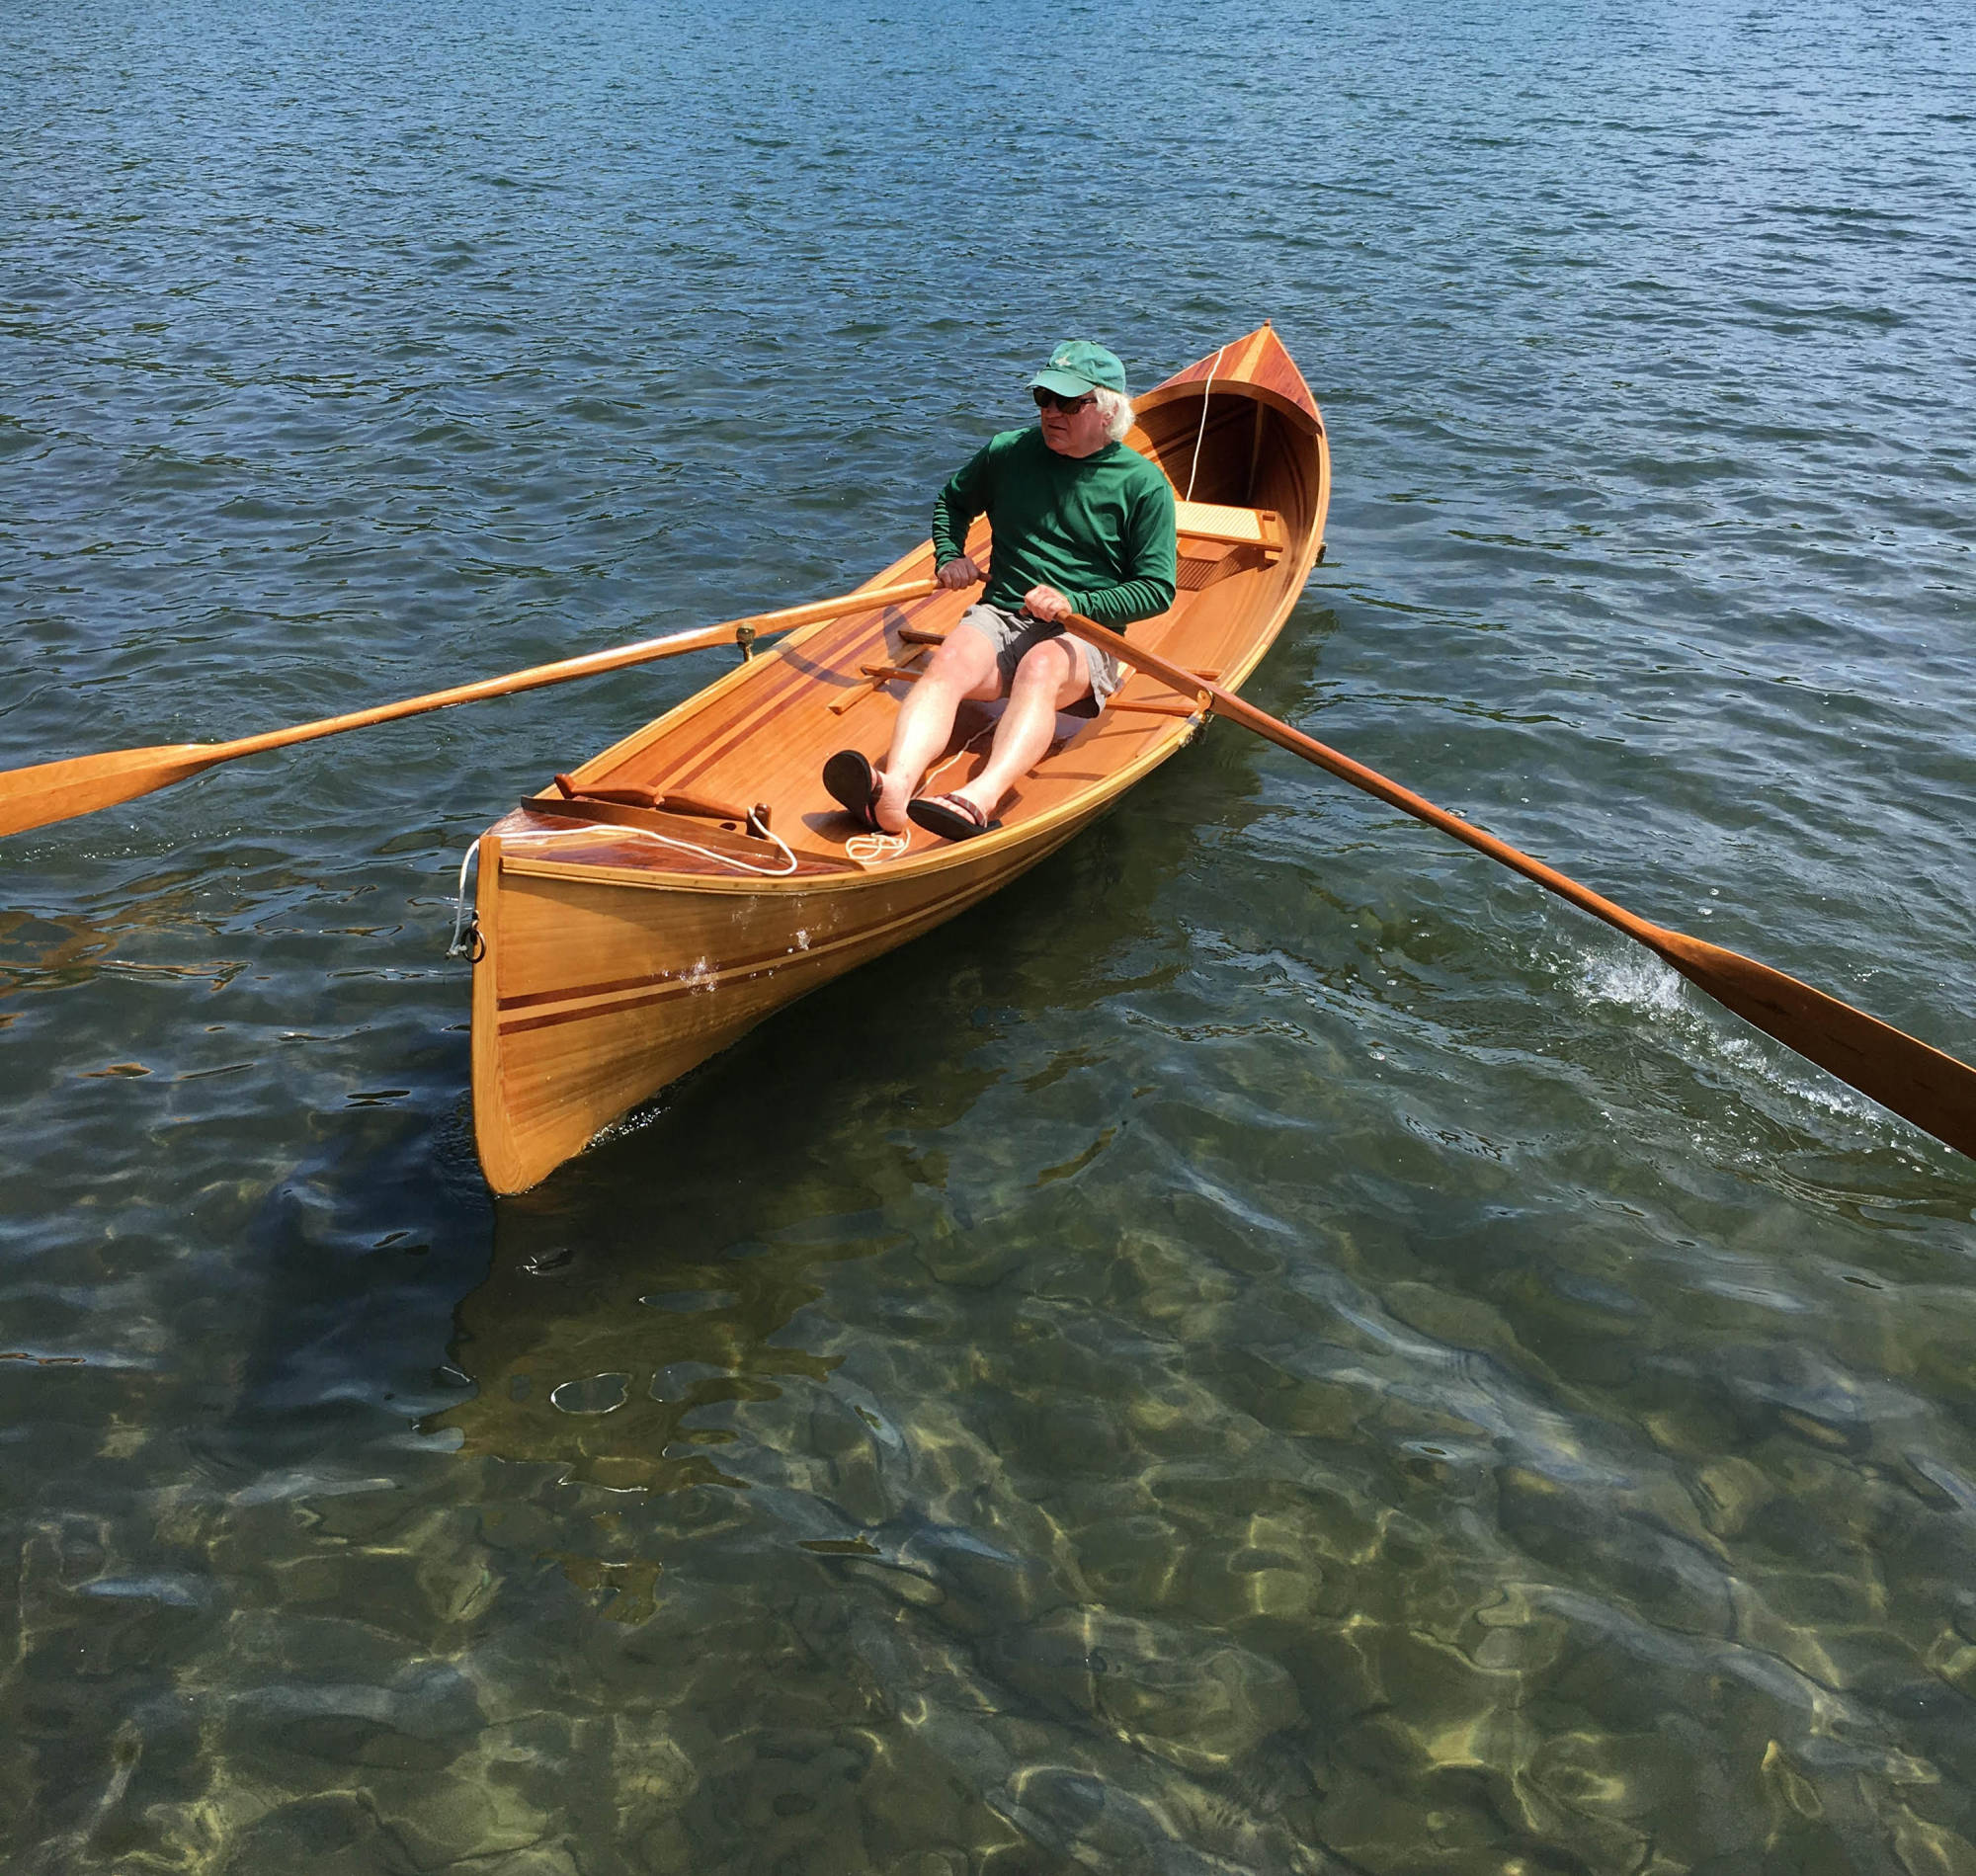 Steve Child in his Adirondack guide boat